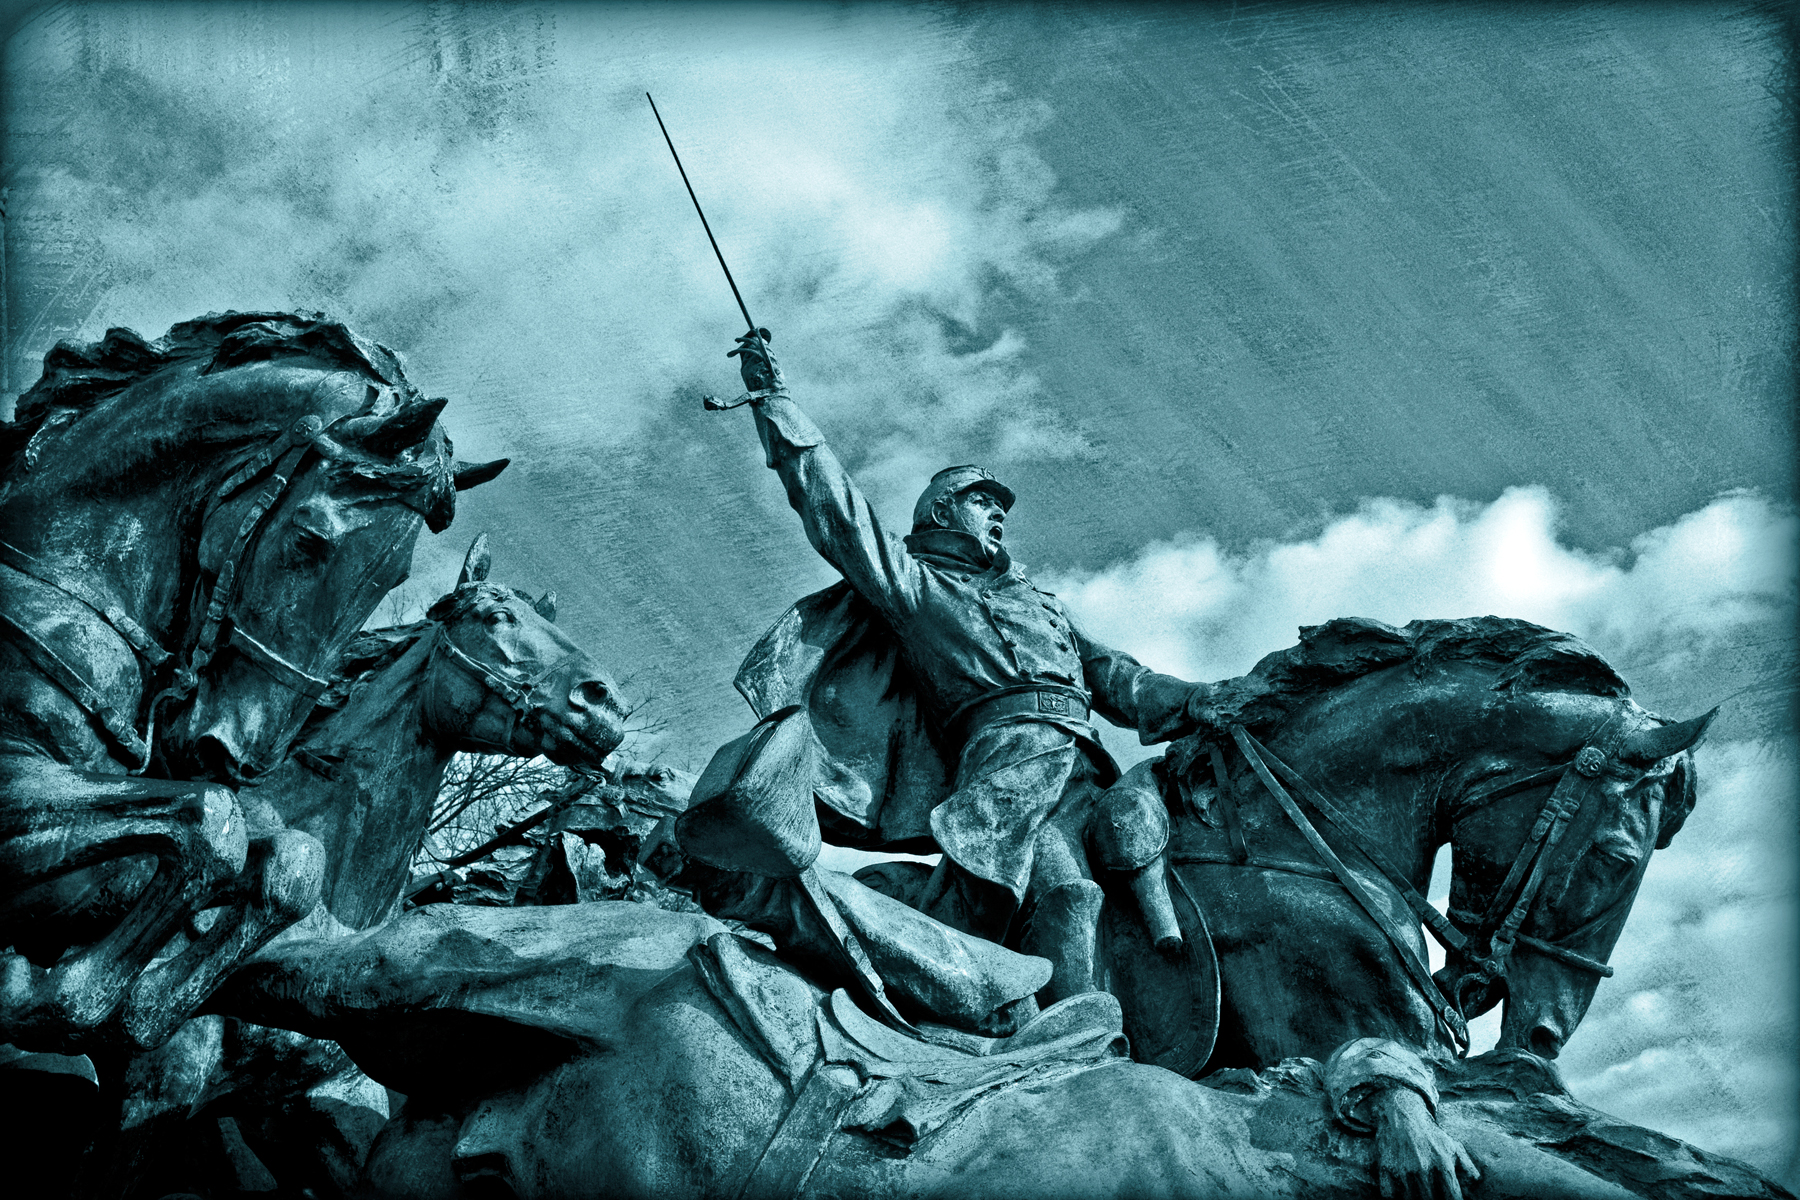 Grant cavalry statue - cyanotype photo